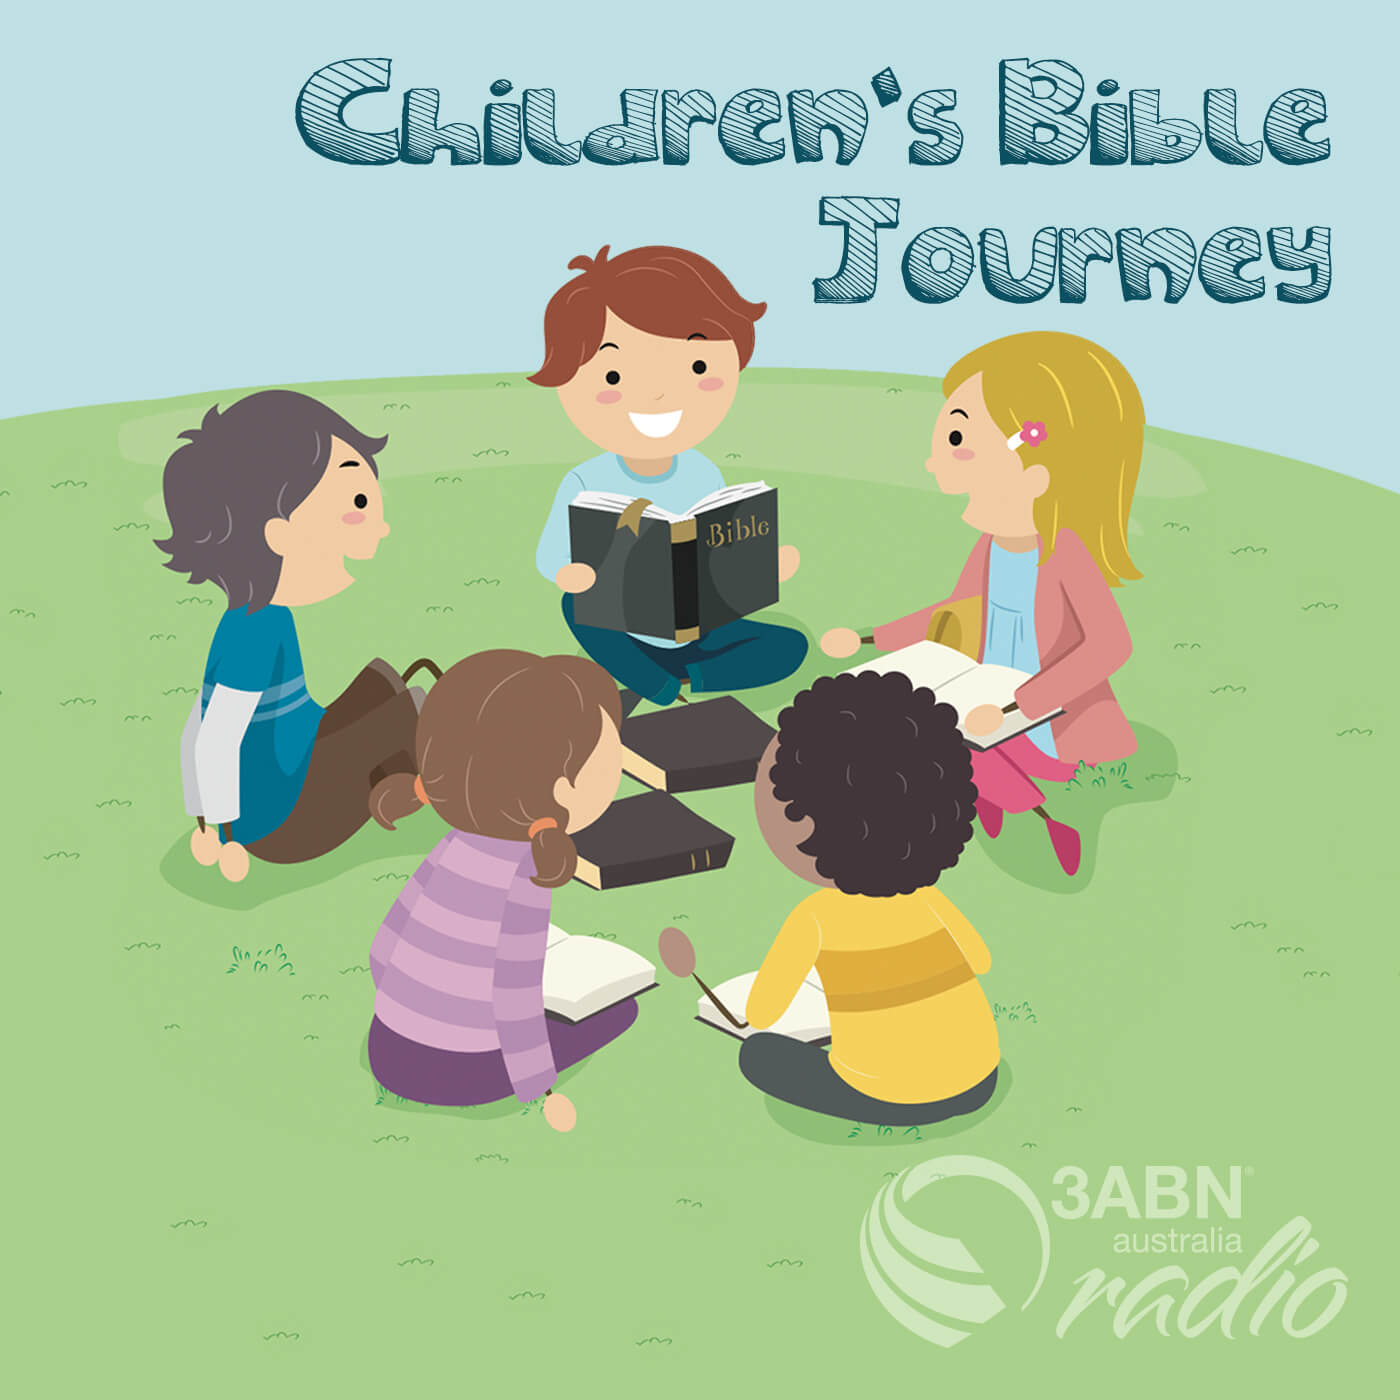 Children's Bible Journey - 2125